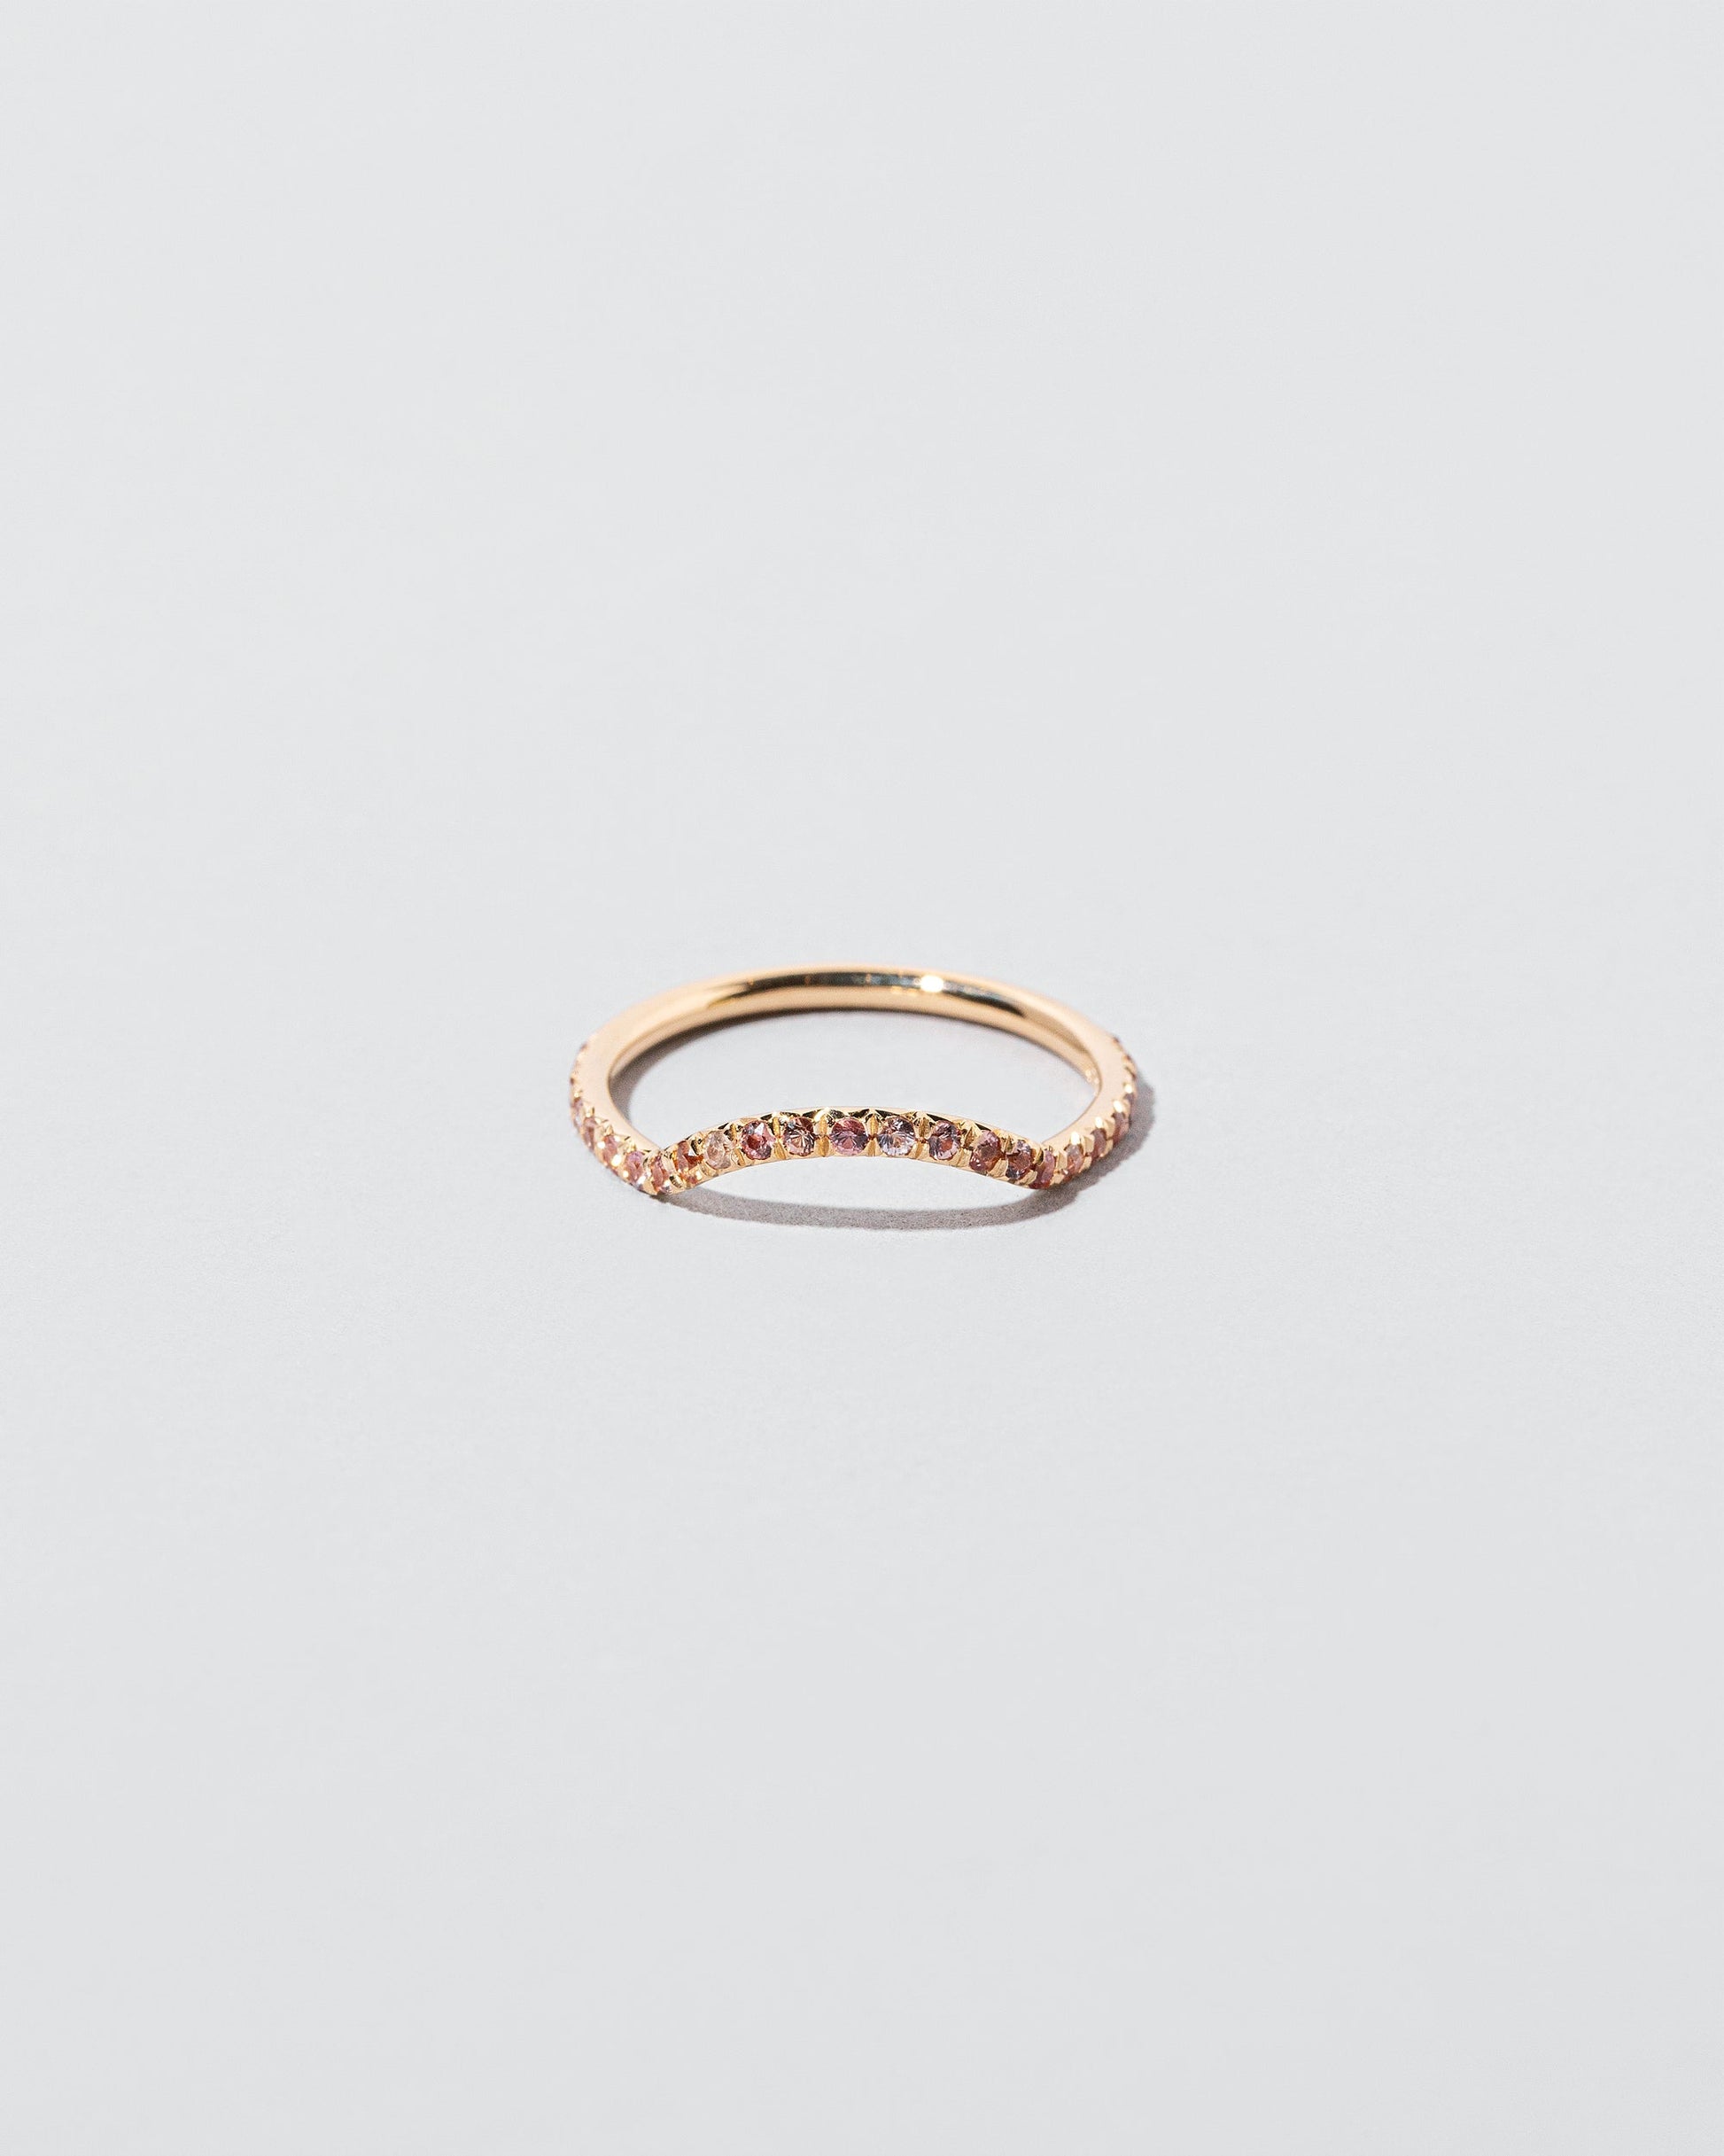  Mini Curve Band with pavé set peach sapphires on light color background.